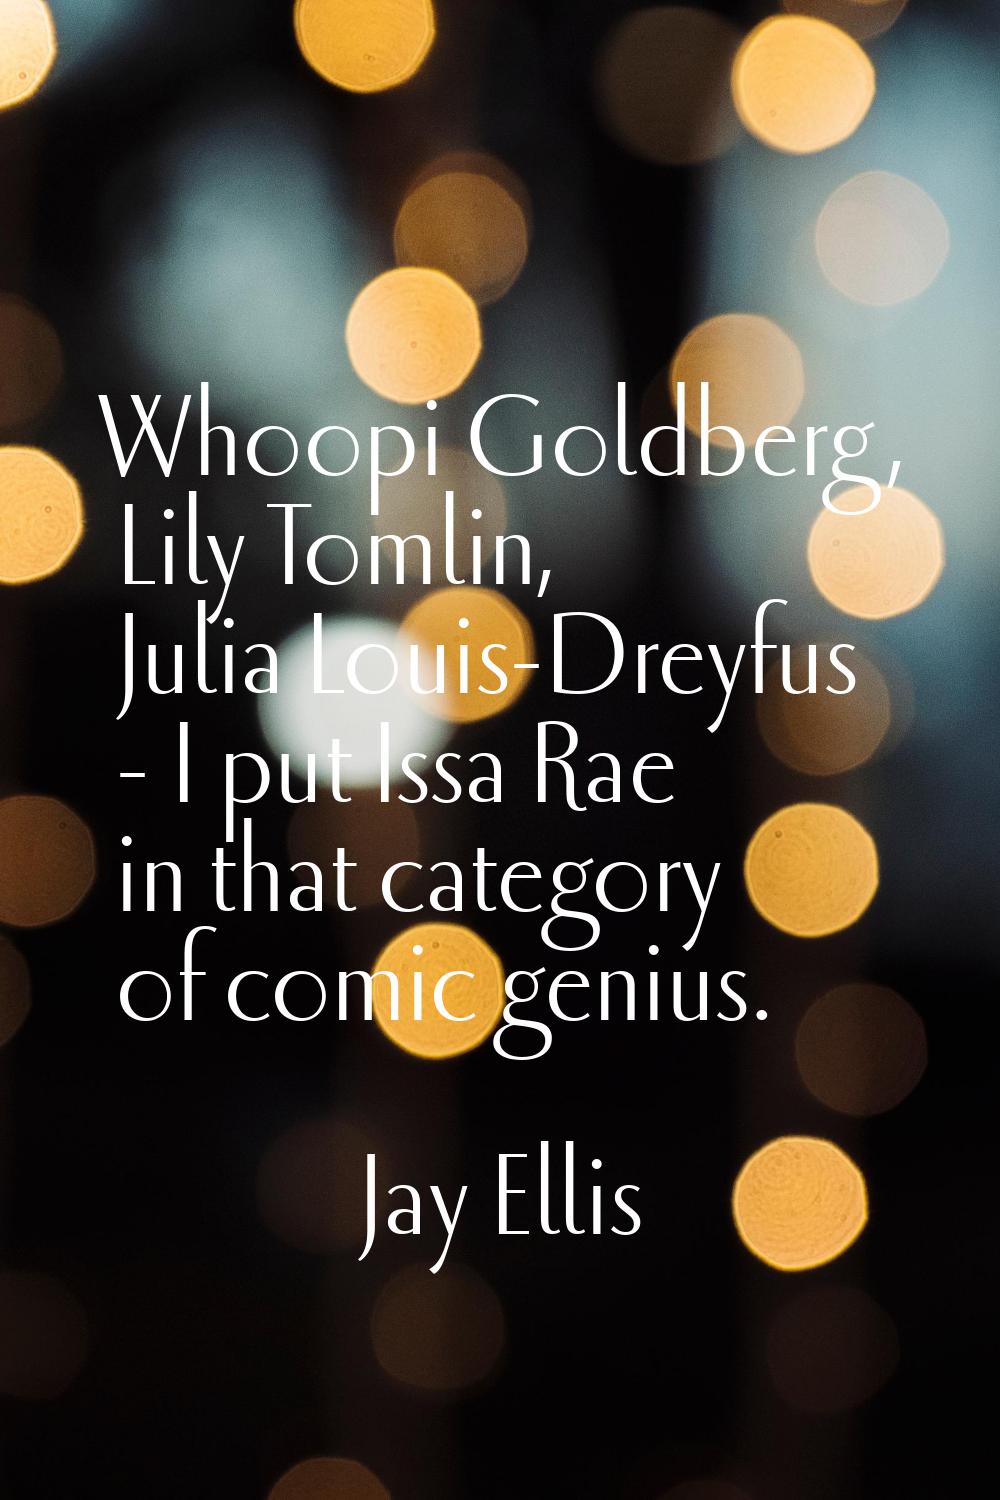 Whoopi Goldberg, Lily Tomlin, Julia Louis-Dreyfus - I put Issa Rae in that category of comic genius